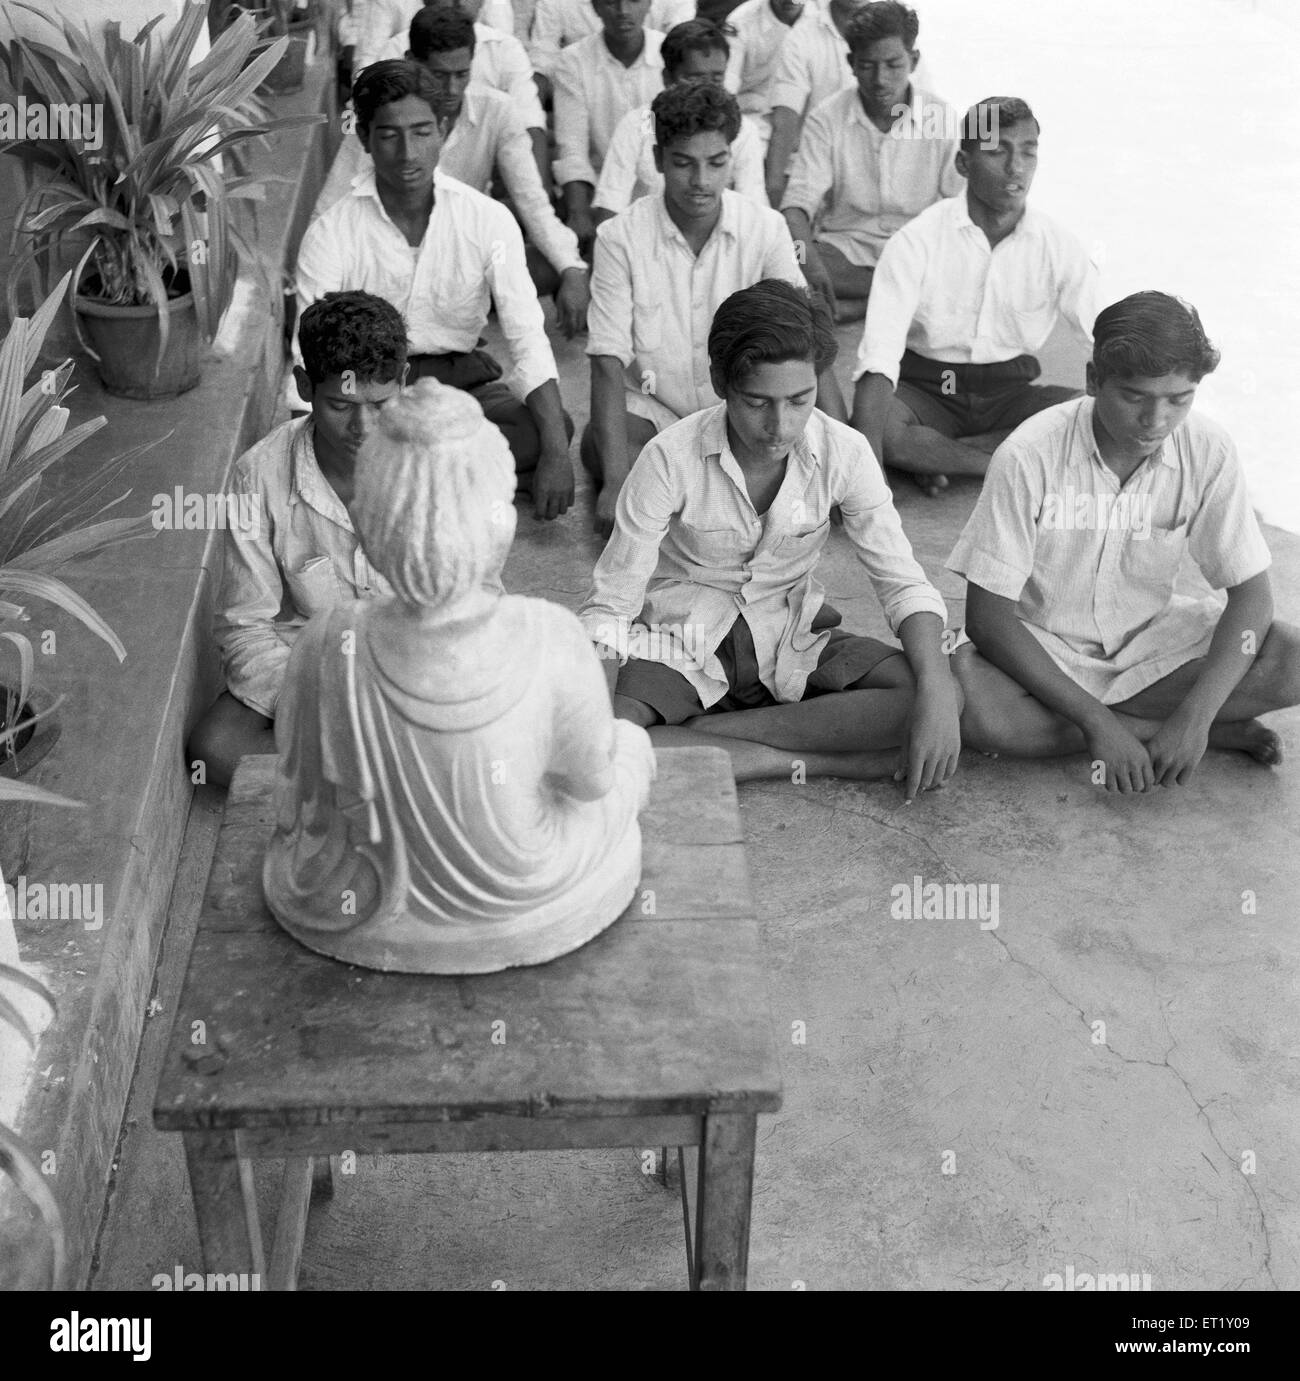 Alunni in classe ; VIDYAPITH sta addestrando i giovani rurali per la vita progressiva ; città di Nanjangud Mysore ; Karnataka ; India ; Asia ; vecchia annata del 1900 Foto Stock